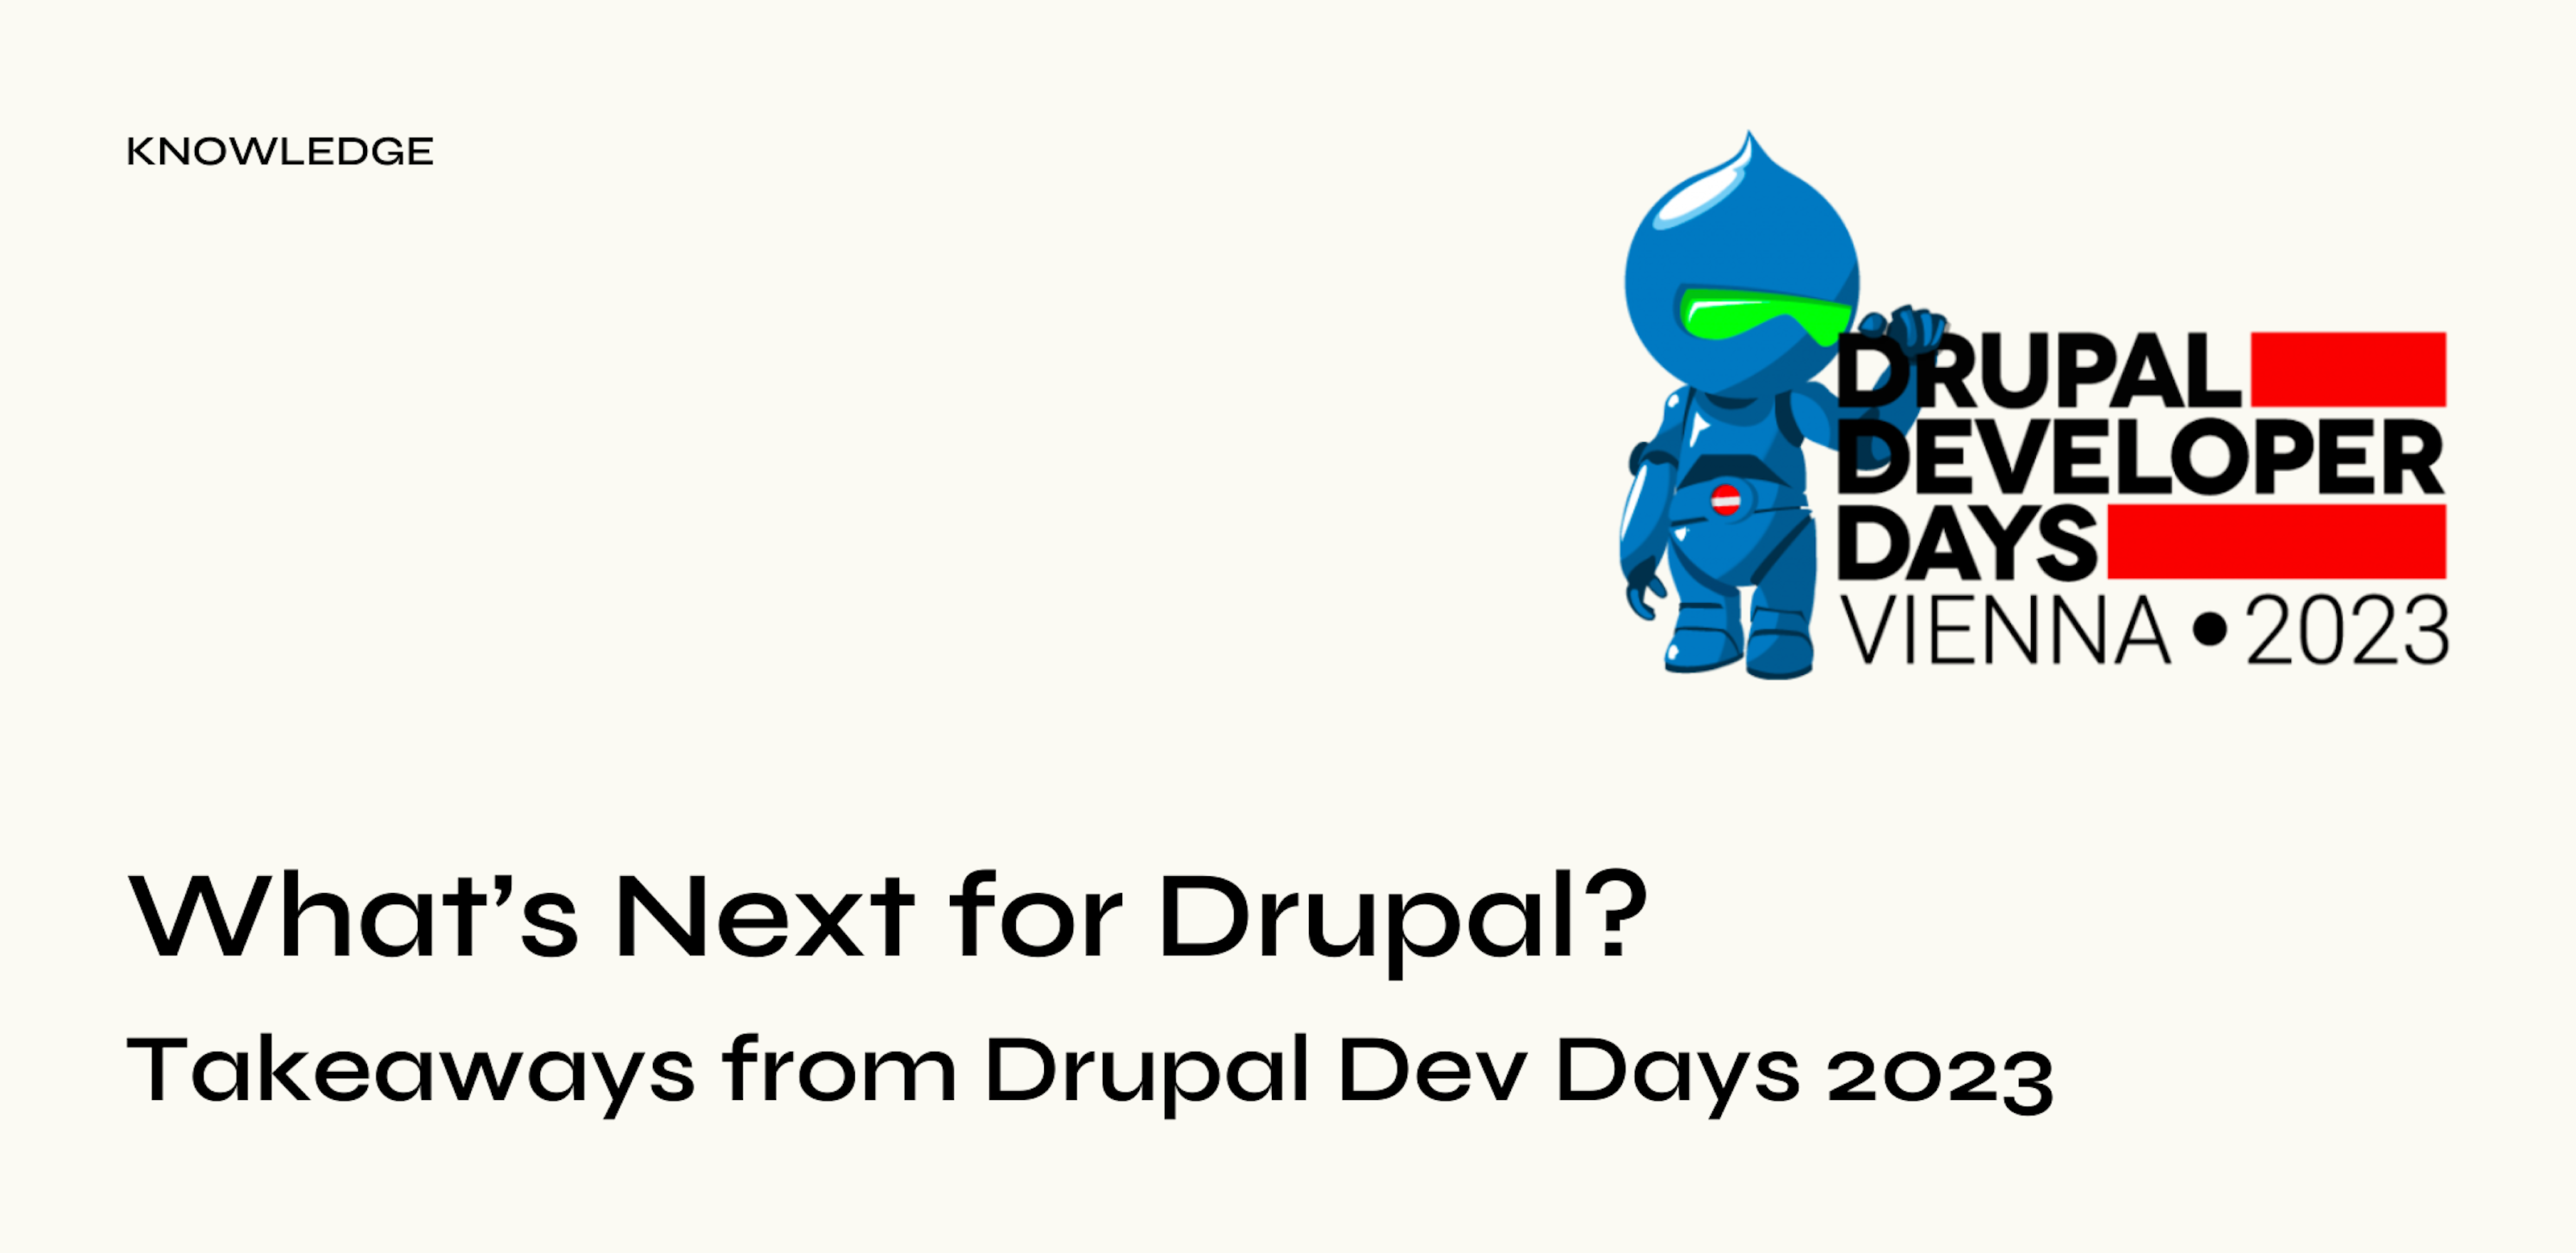 What’s Next for Drupal? Takeaways from Drupal Dev Days 2023